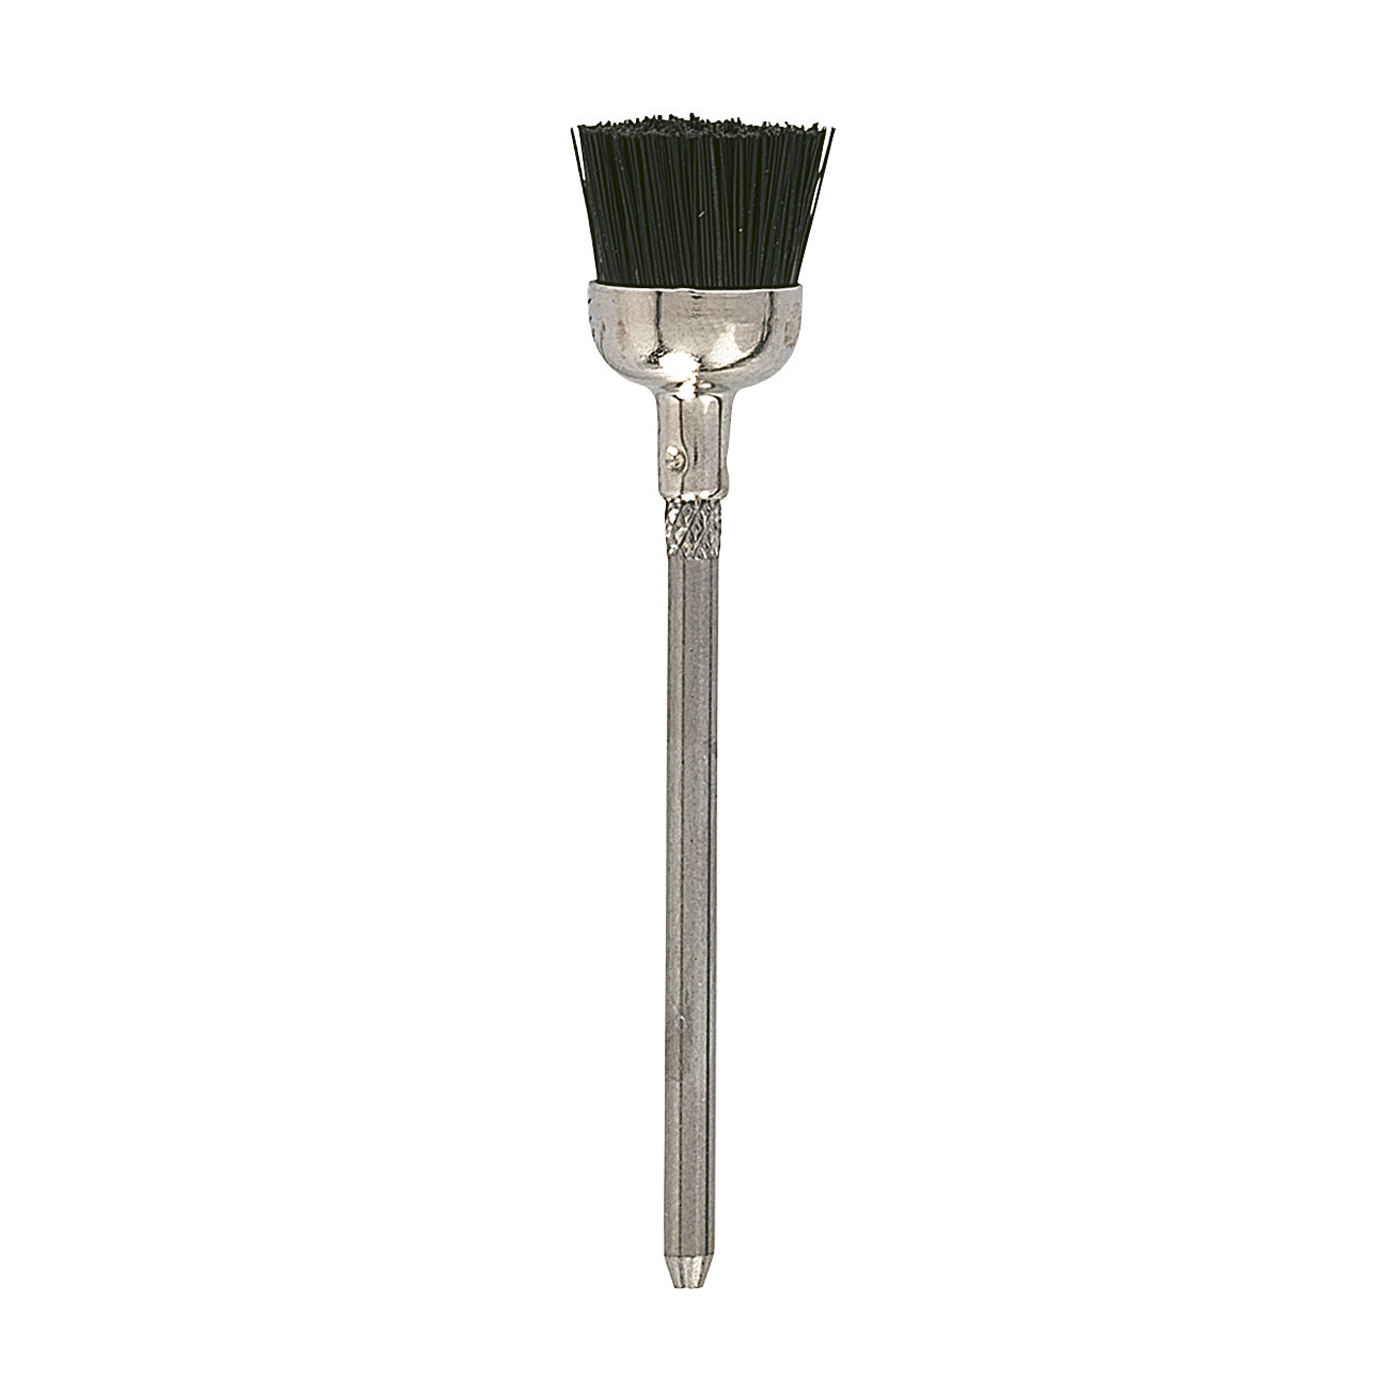 Cup-Shaped Brush, ø 9.7 mm - 1 piece